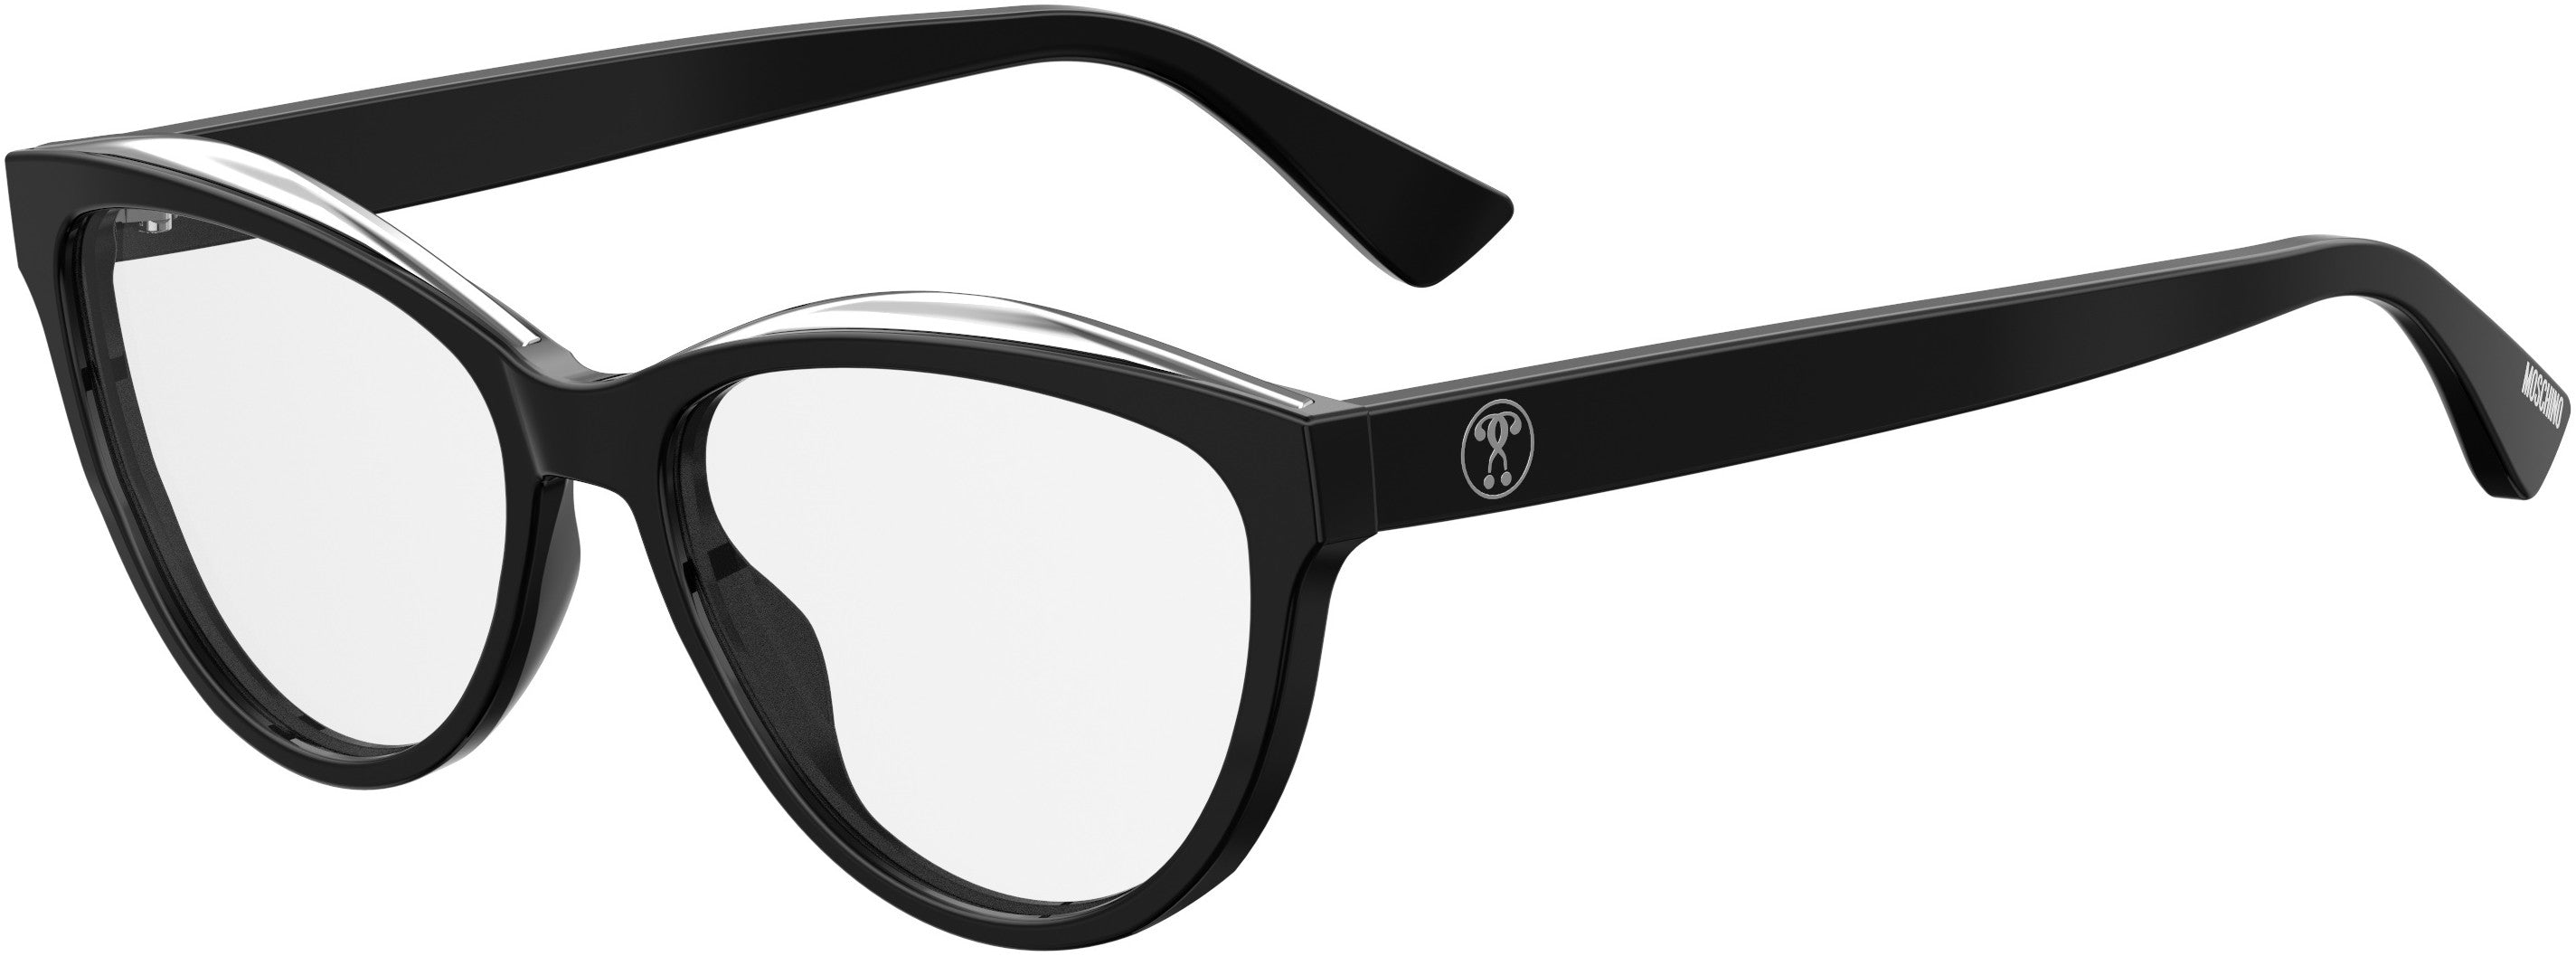  Moschino 529 Cat Eye/butterfly Eyeglasses 0807-0807  Black (00 Demo Lens)